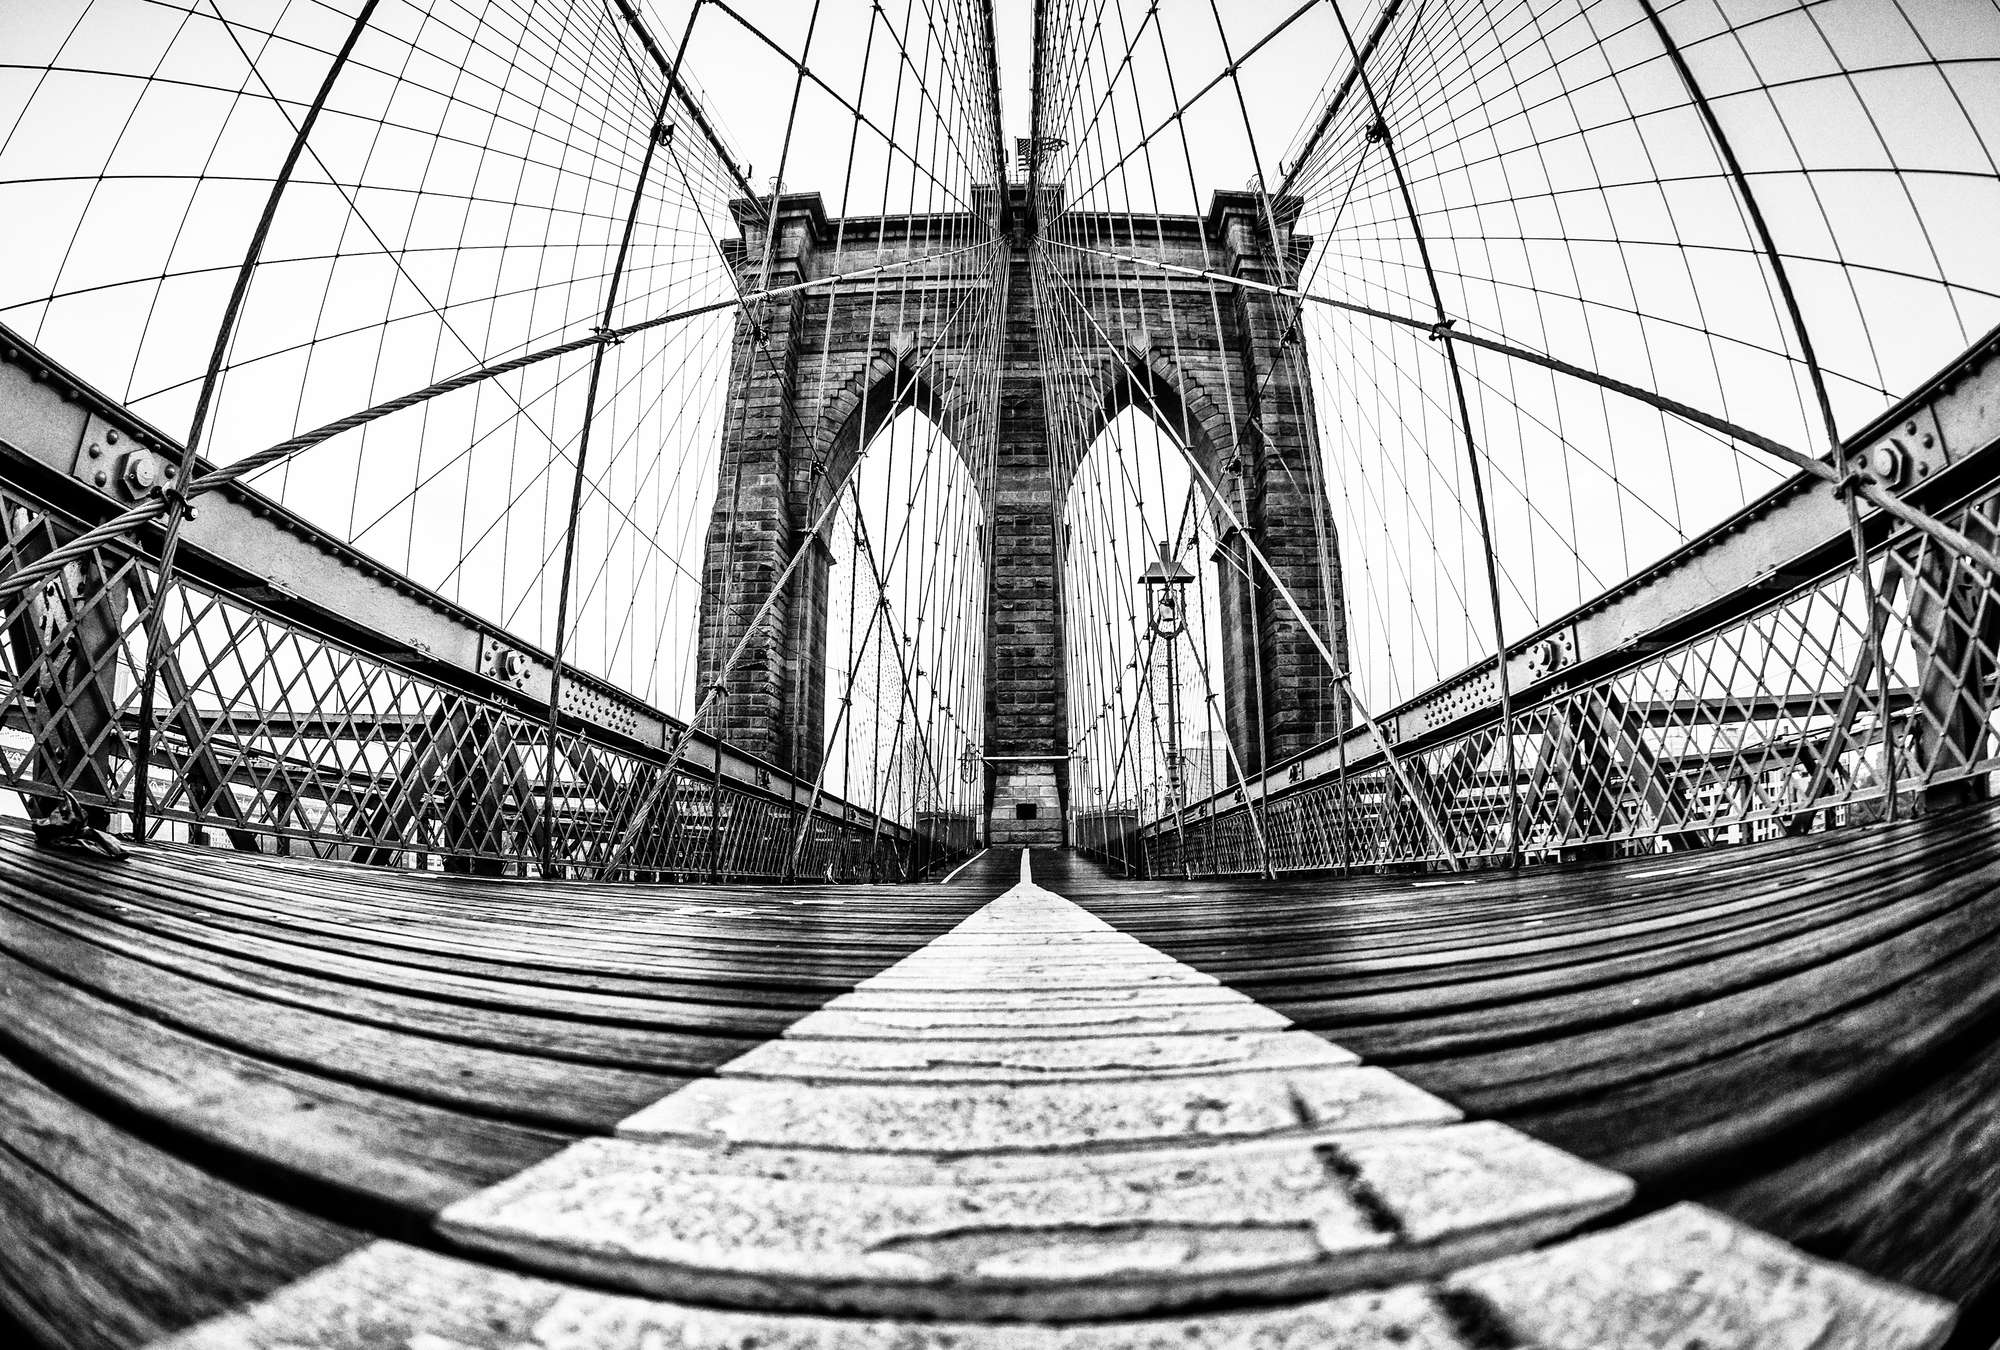             Fototapete Brooklyn Bridge in Schwarz-Weiß – Premium Glattvlies
        